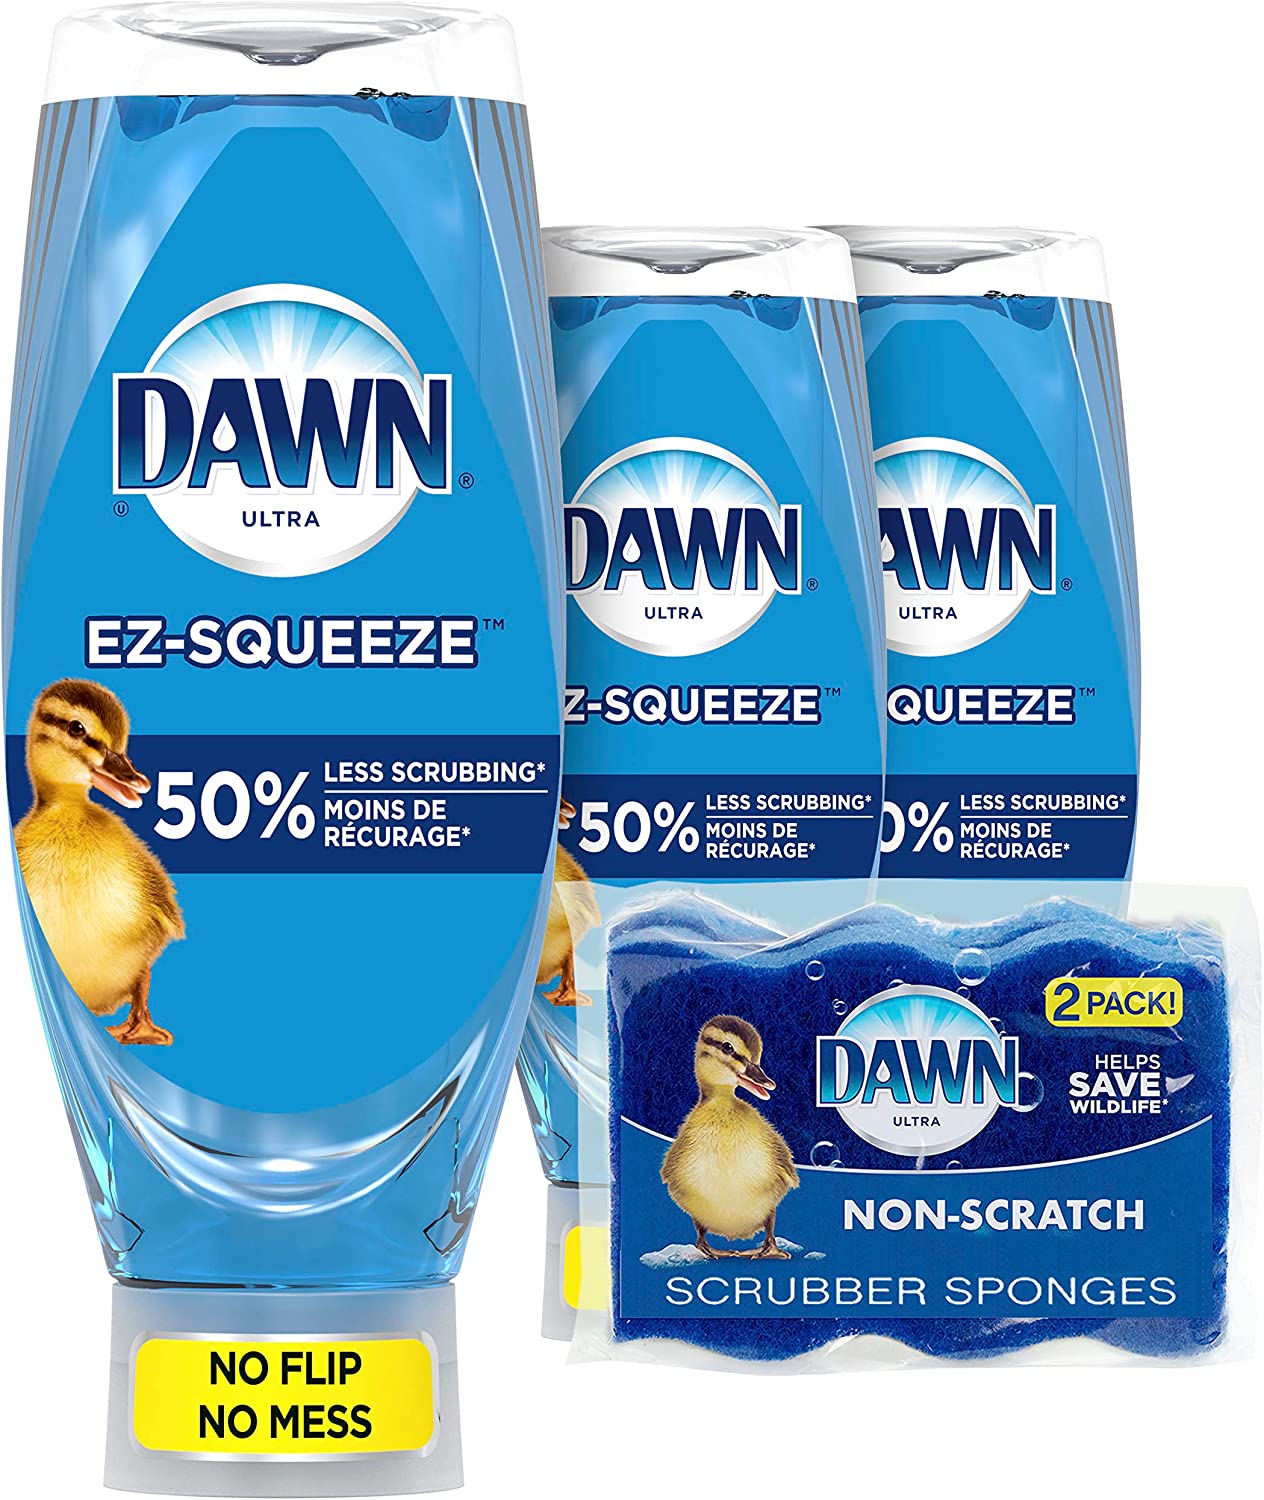 Dawn Dish Soap EZ-Squeeze Dishwashing Liquid + Non-Scratch Sponges for Dishes